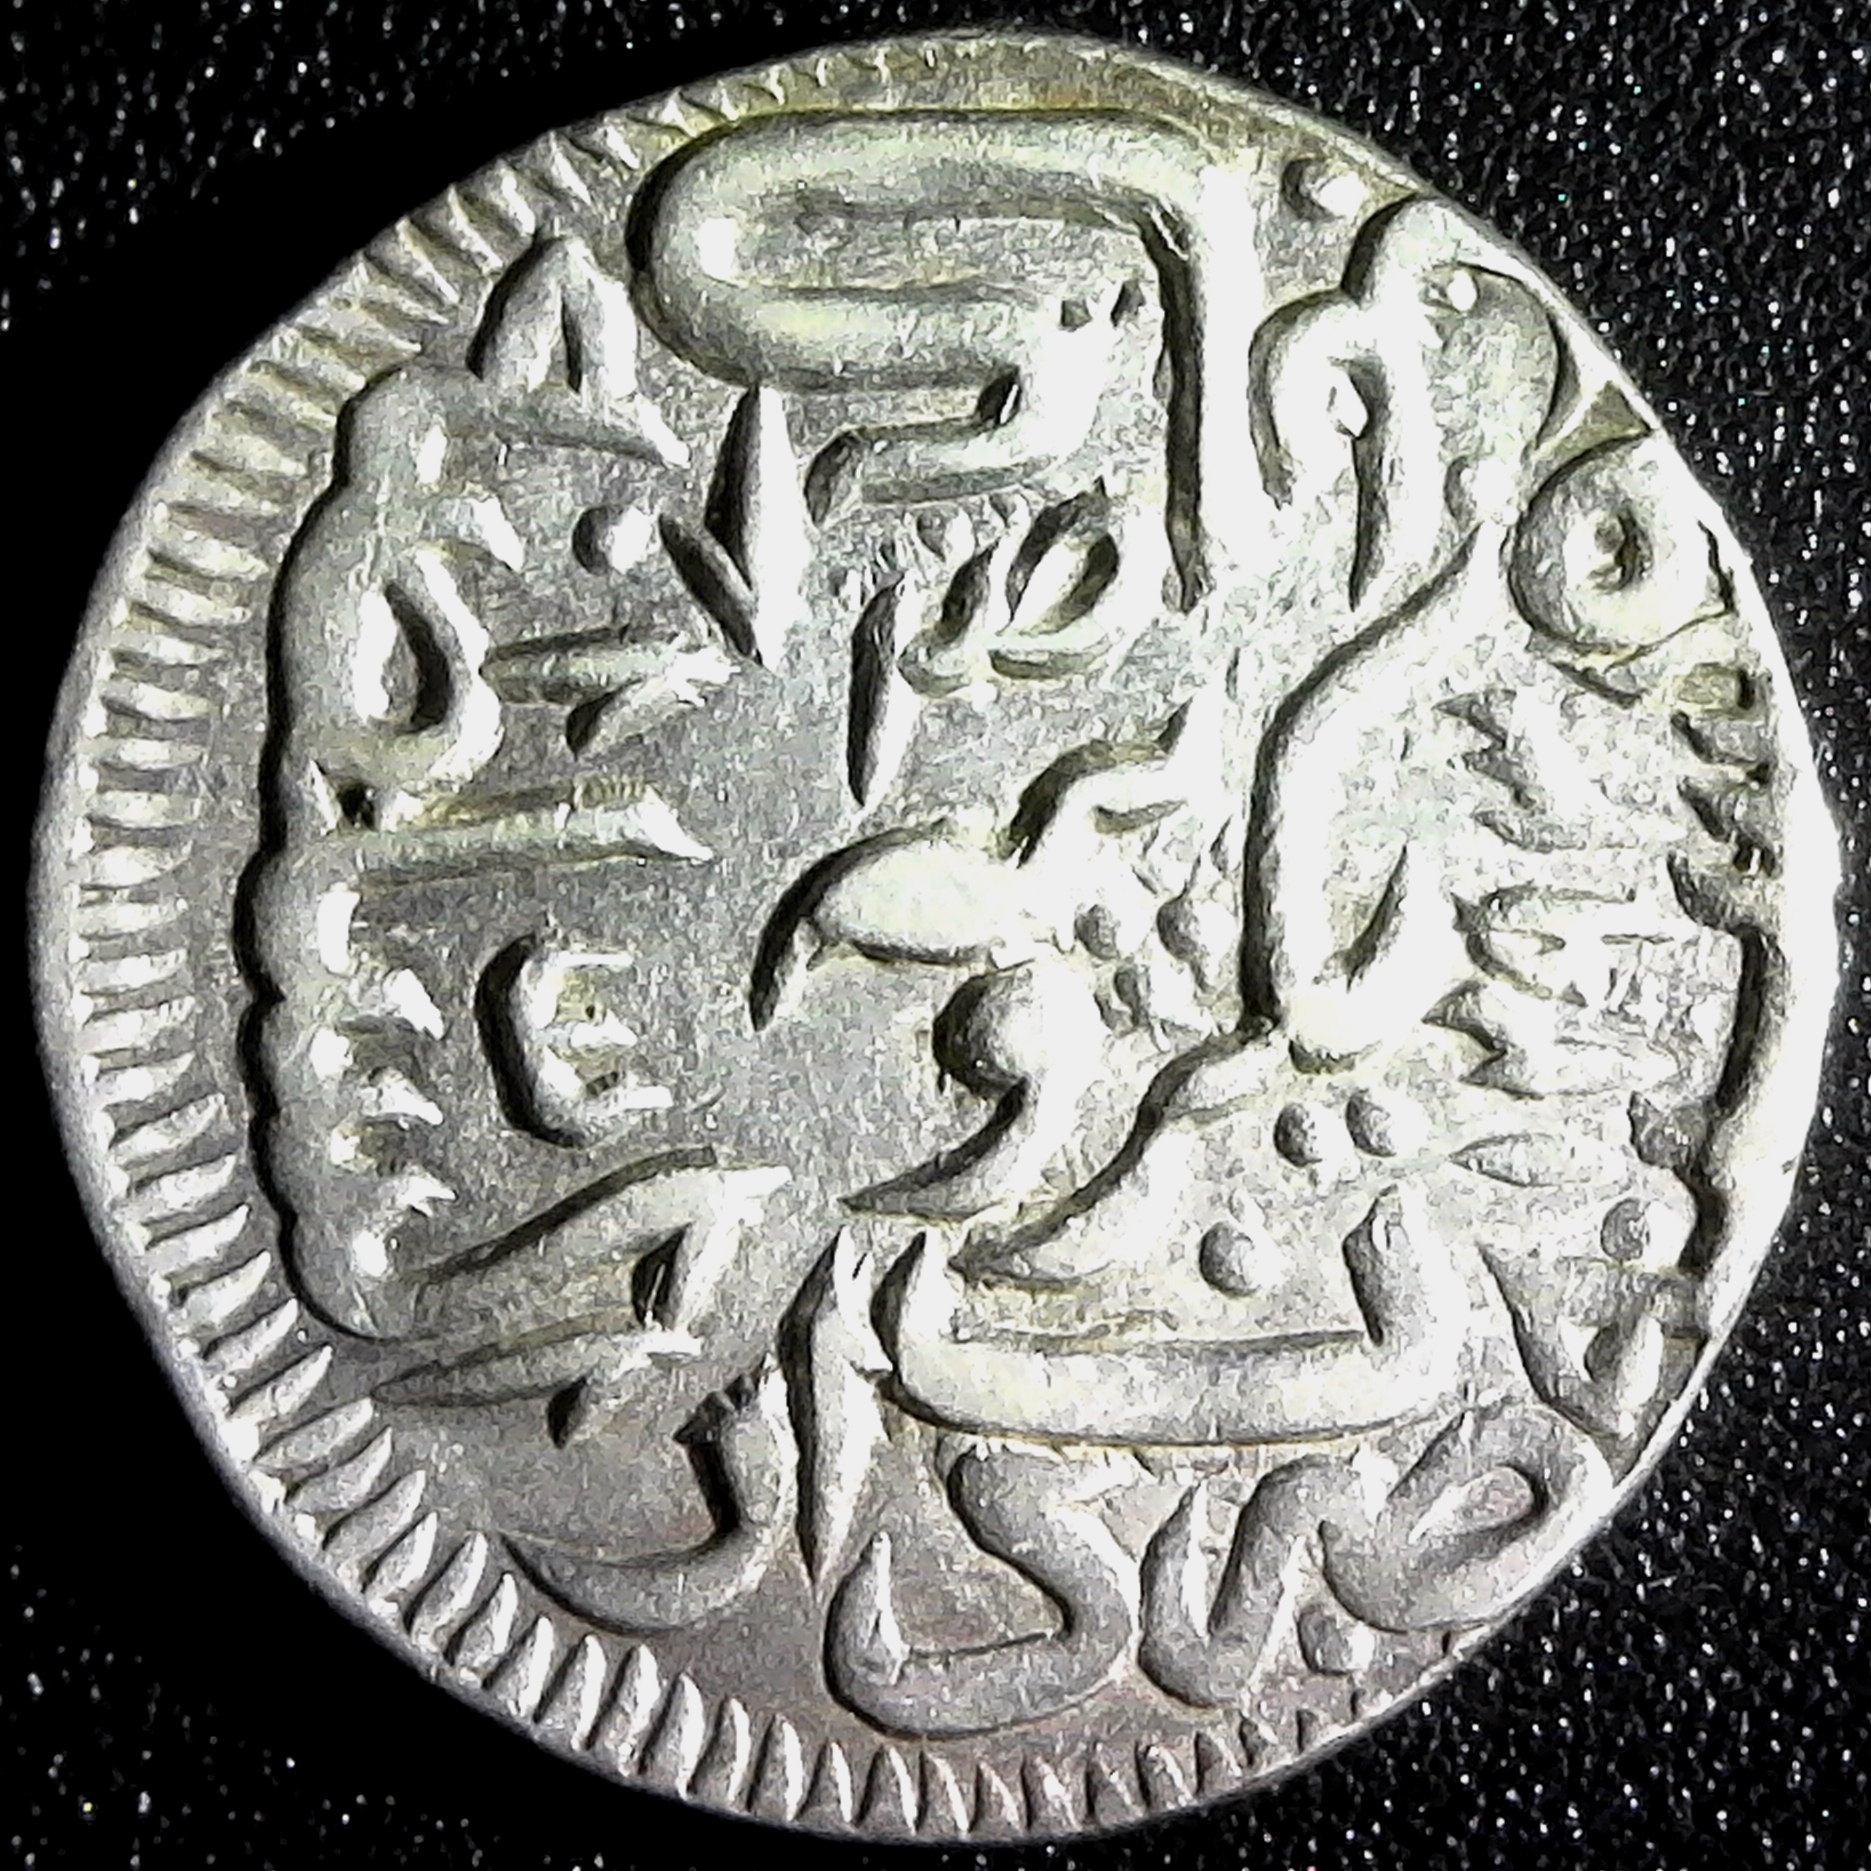 Afghanistan Kabul Mint, AH 1293  AD 1876, Shar'Ali 2nd reign (AH 1285-1296) R#305 KM 520 rev B.jpg